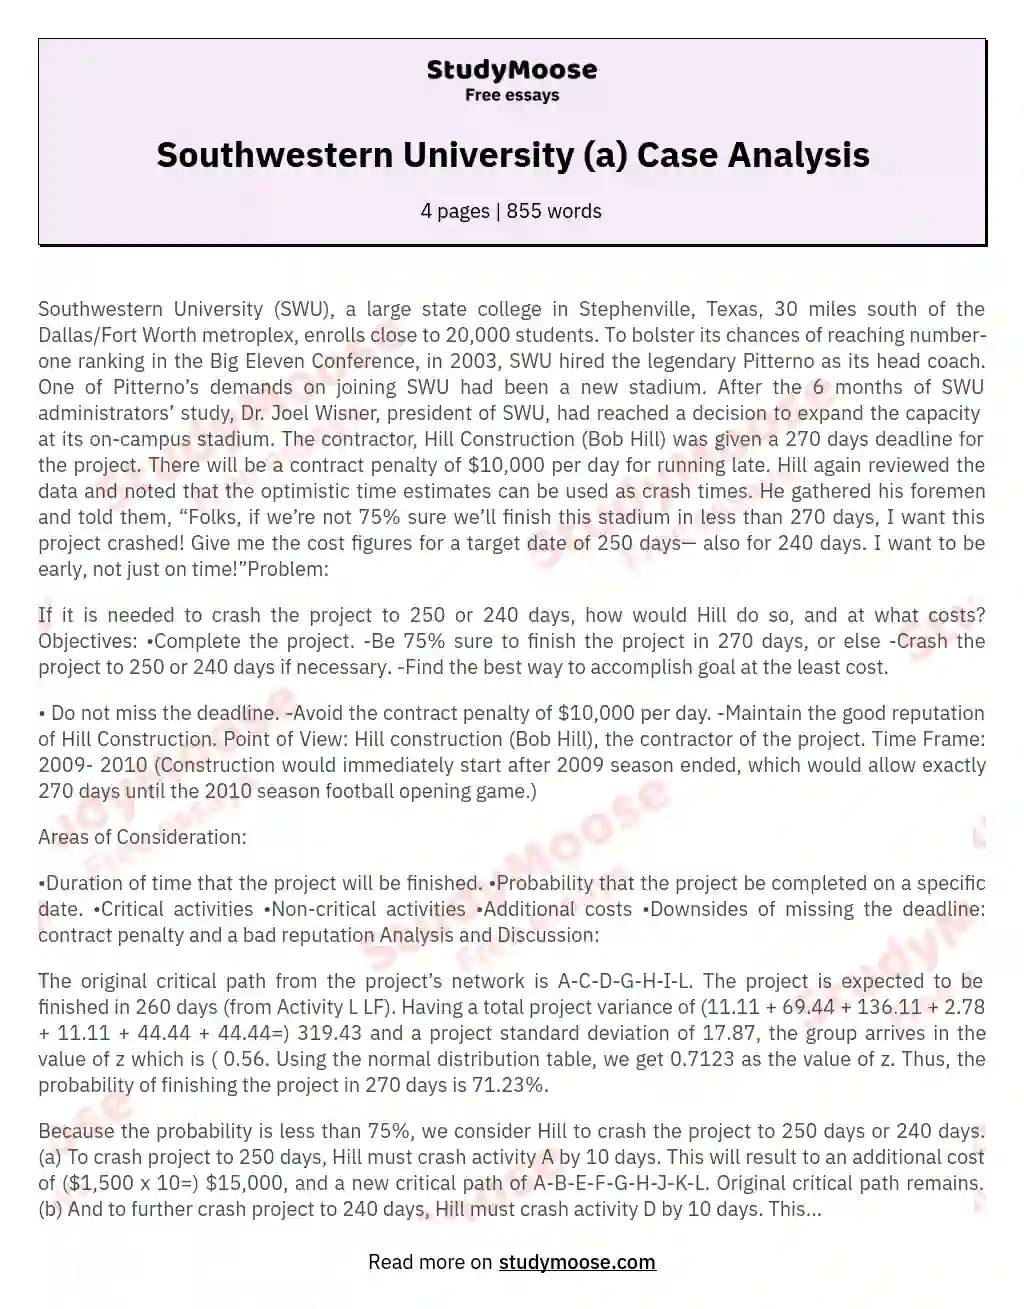 Southwestern University (a) Case Analysis essay